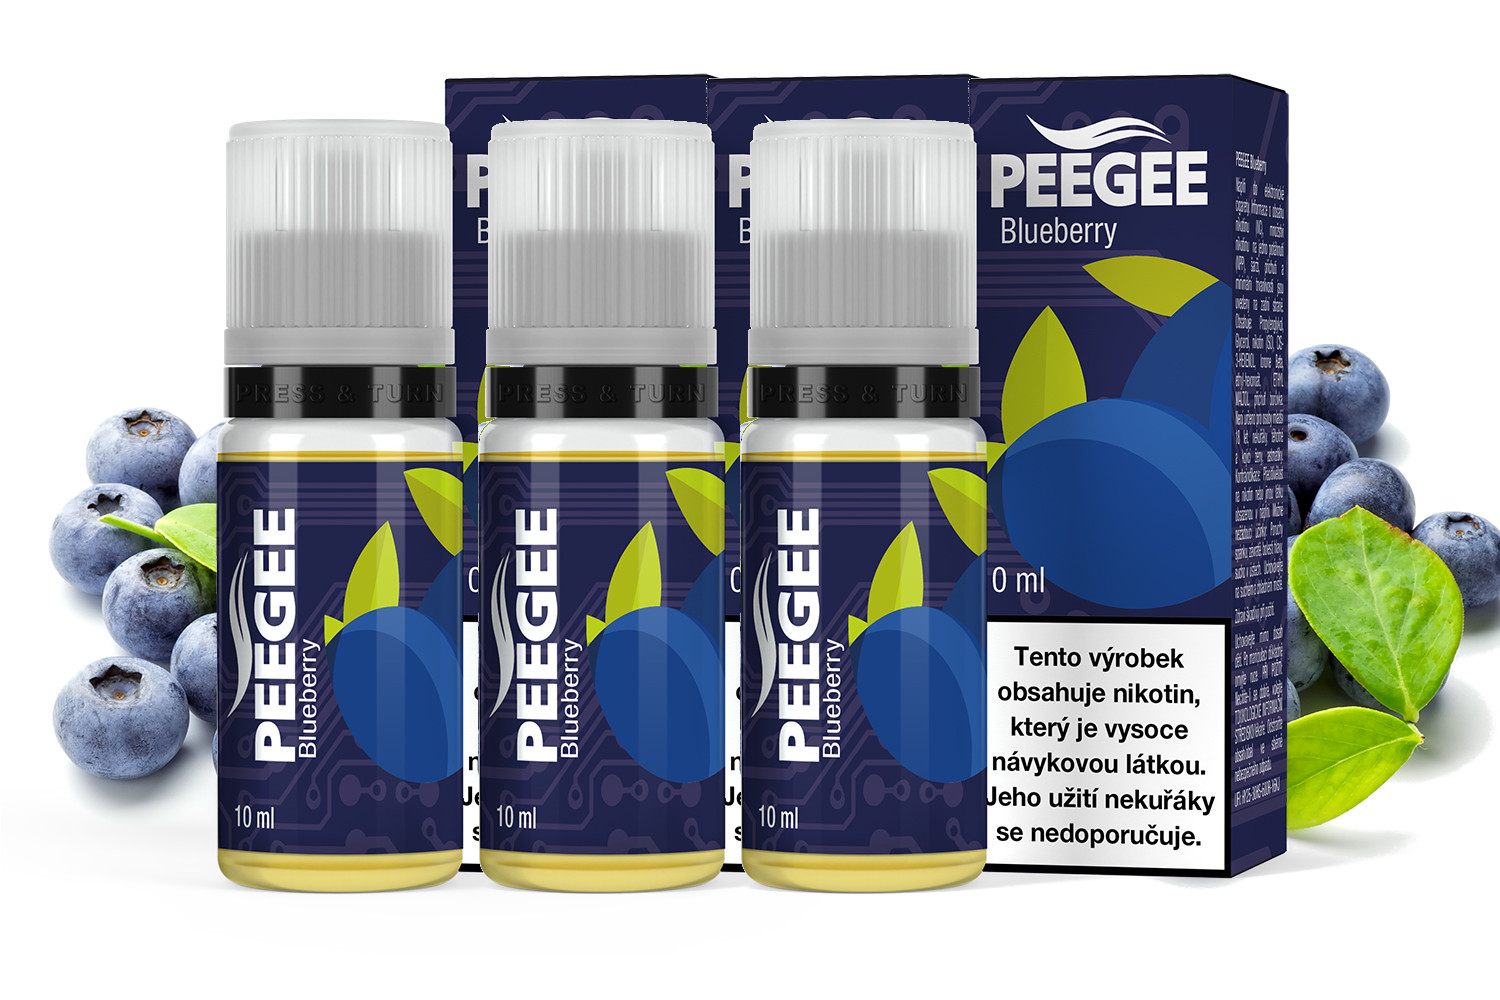 PEEGEE - Borůvka (Blueberry) 3x10ml Obsah nikotinu: 18mg